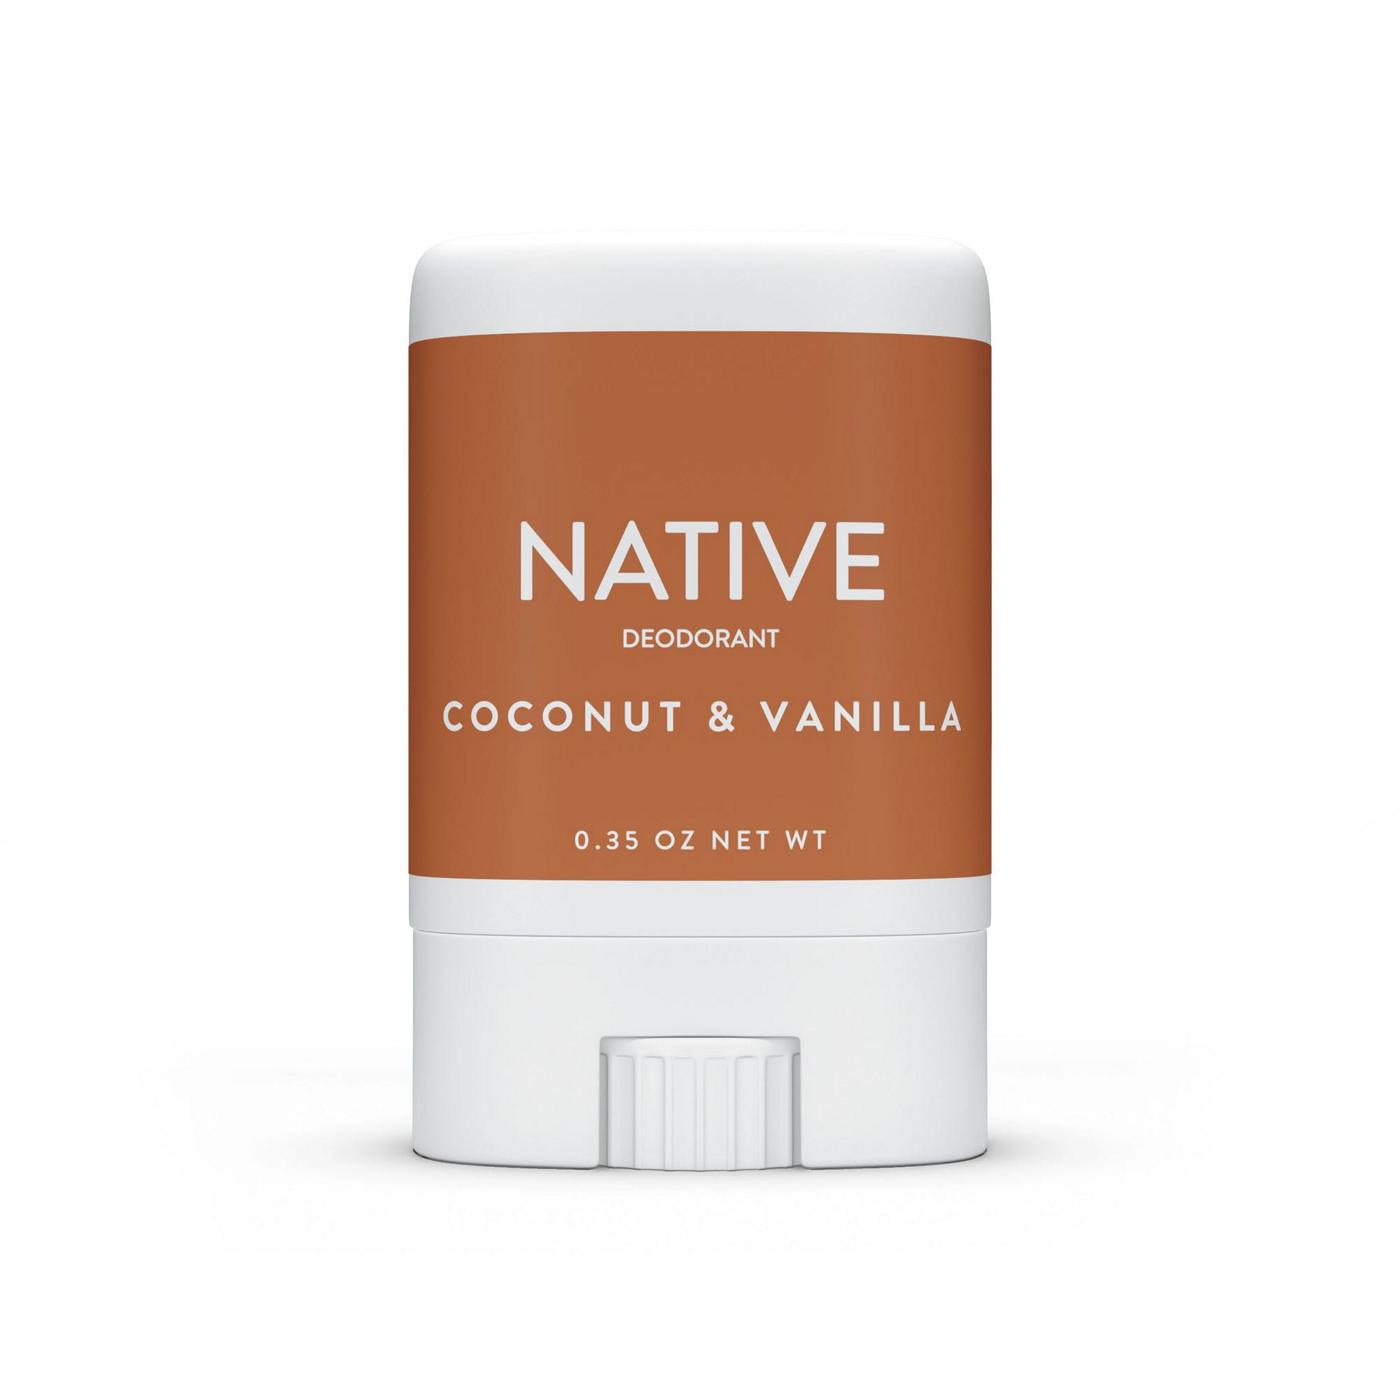 Native Deodorant - Coconut & Vanilla; image 1 of 2